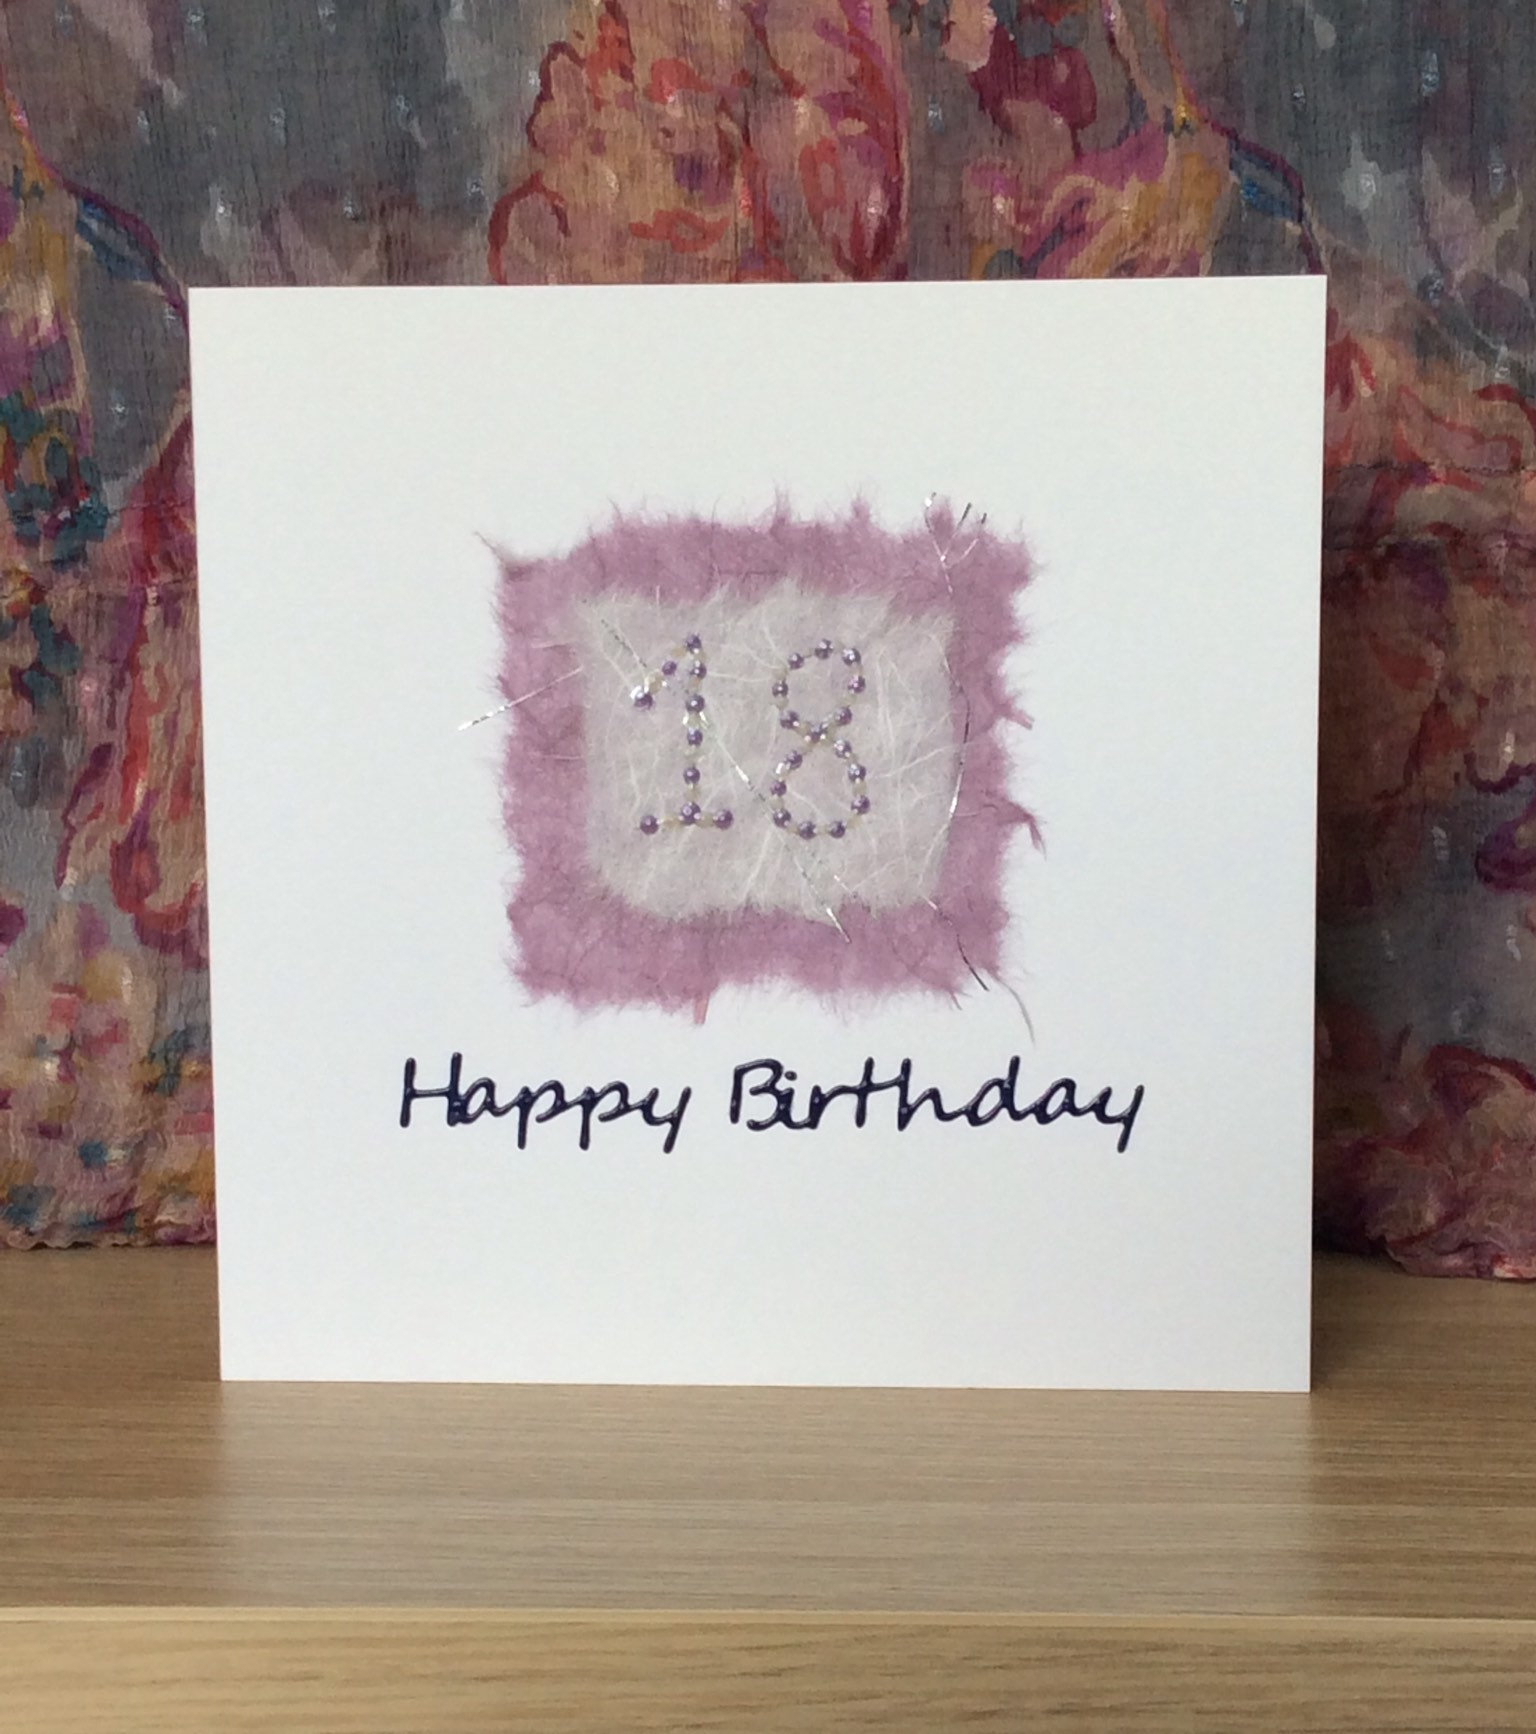 18Th Birthday Card Ideas Handmade Handmade 18th Happy Birthday Cards Shab Chic Style